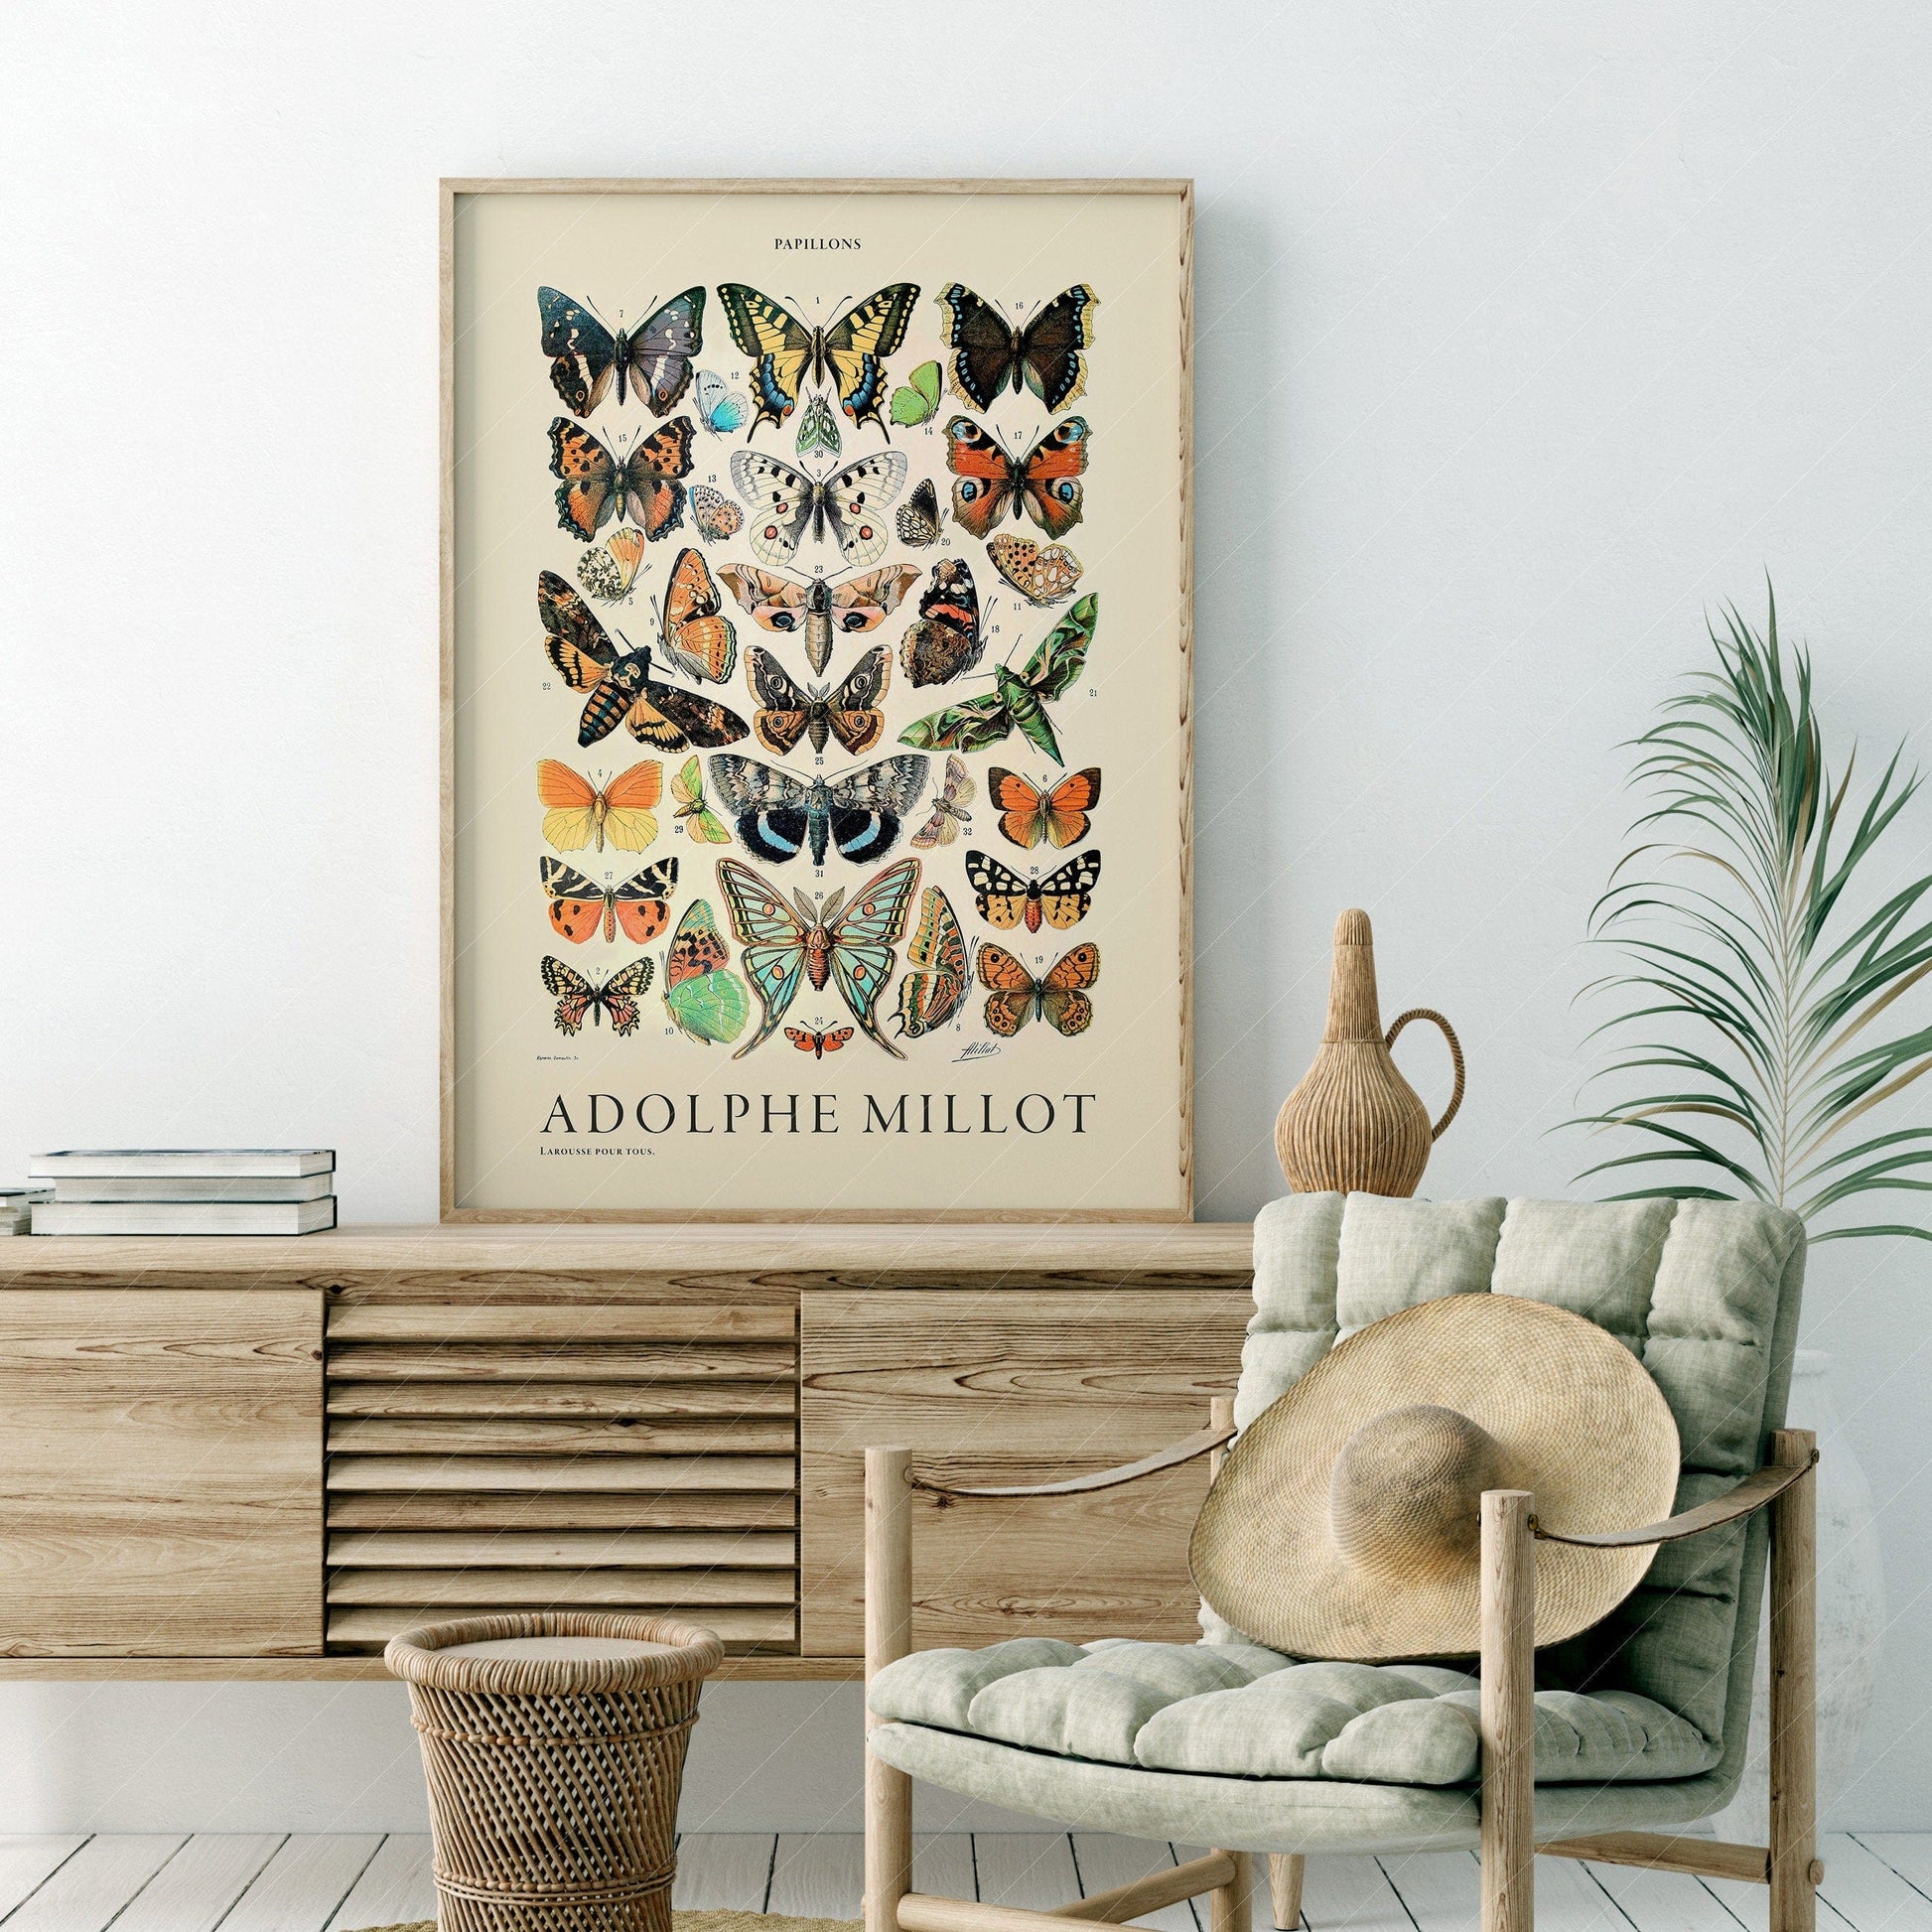 Home Poster Decor Vintage Butterfly Print, Adolphe Millot Poster, Papillon Wall Art, Butterfly Decor, Vintage Nursery, 8x10 11x14 A2 50x70 60x90 18x24 24x36